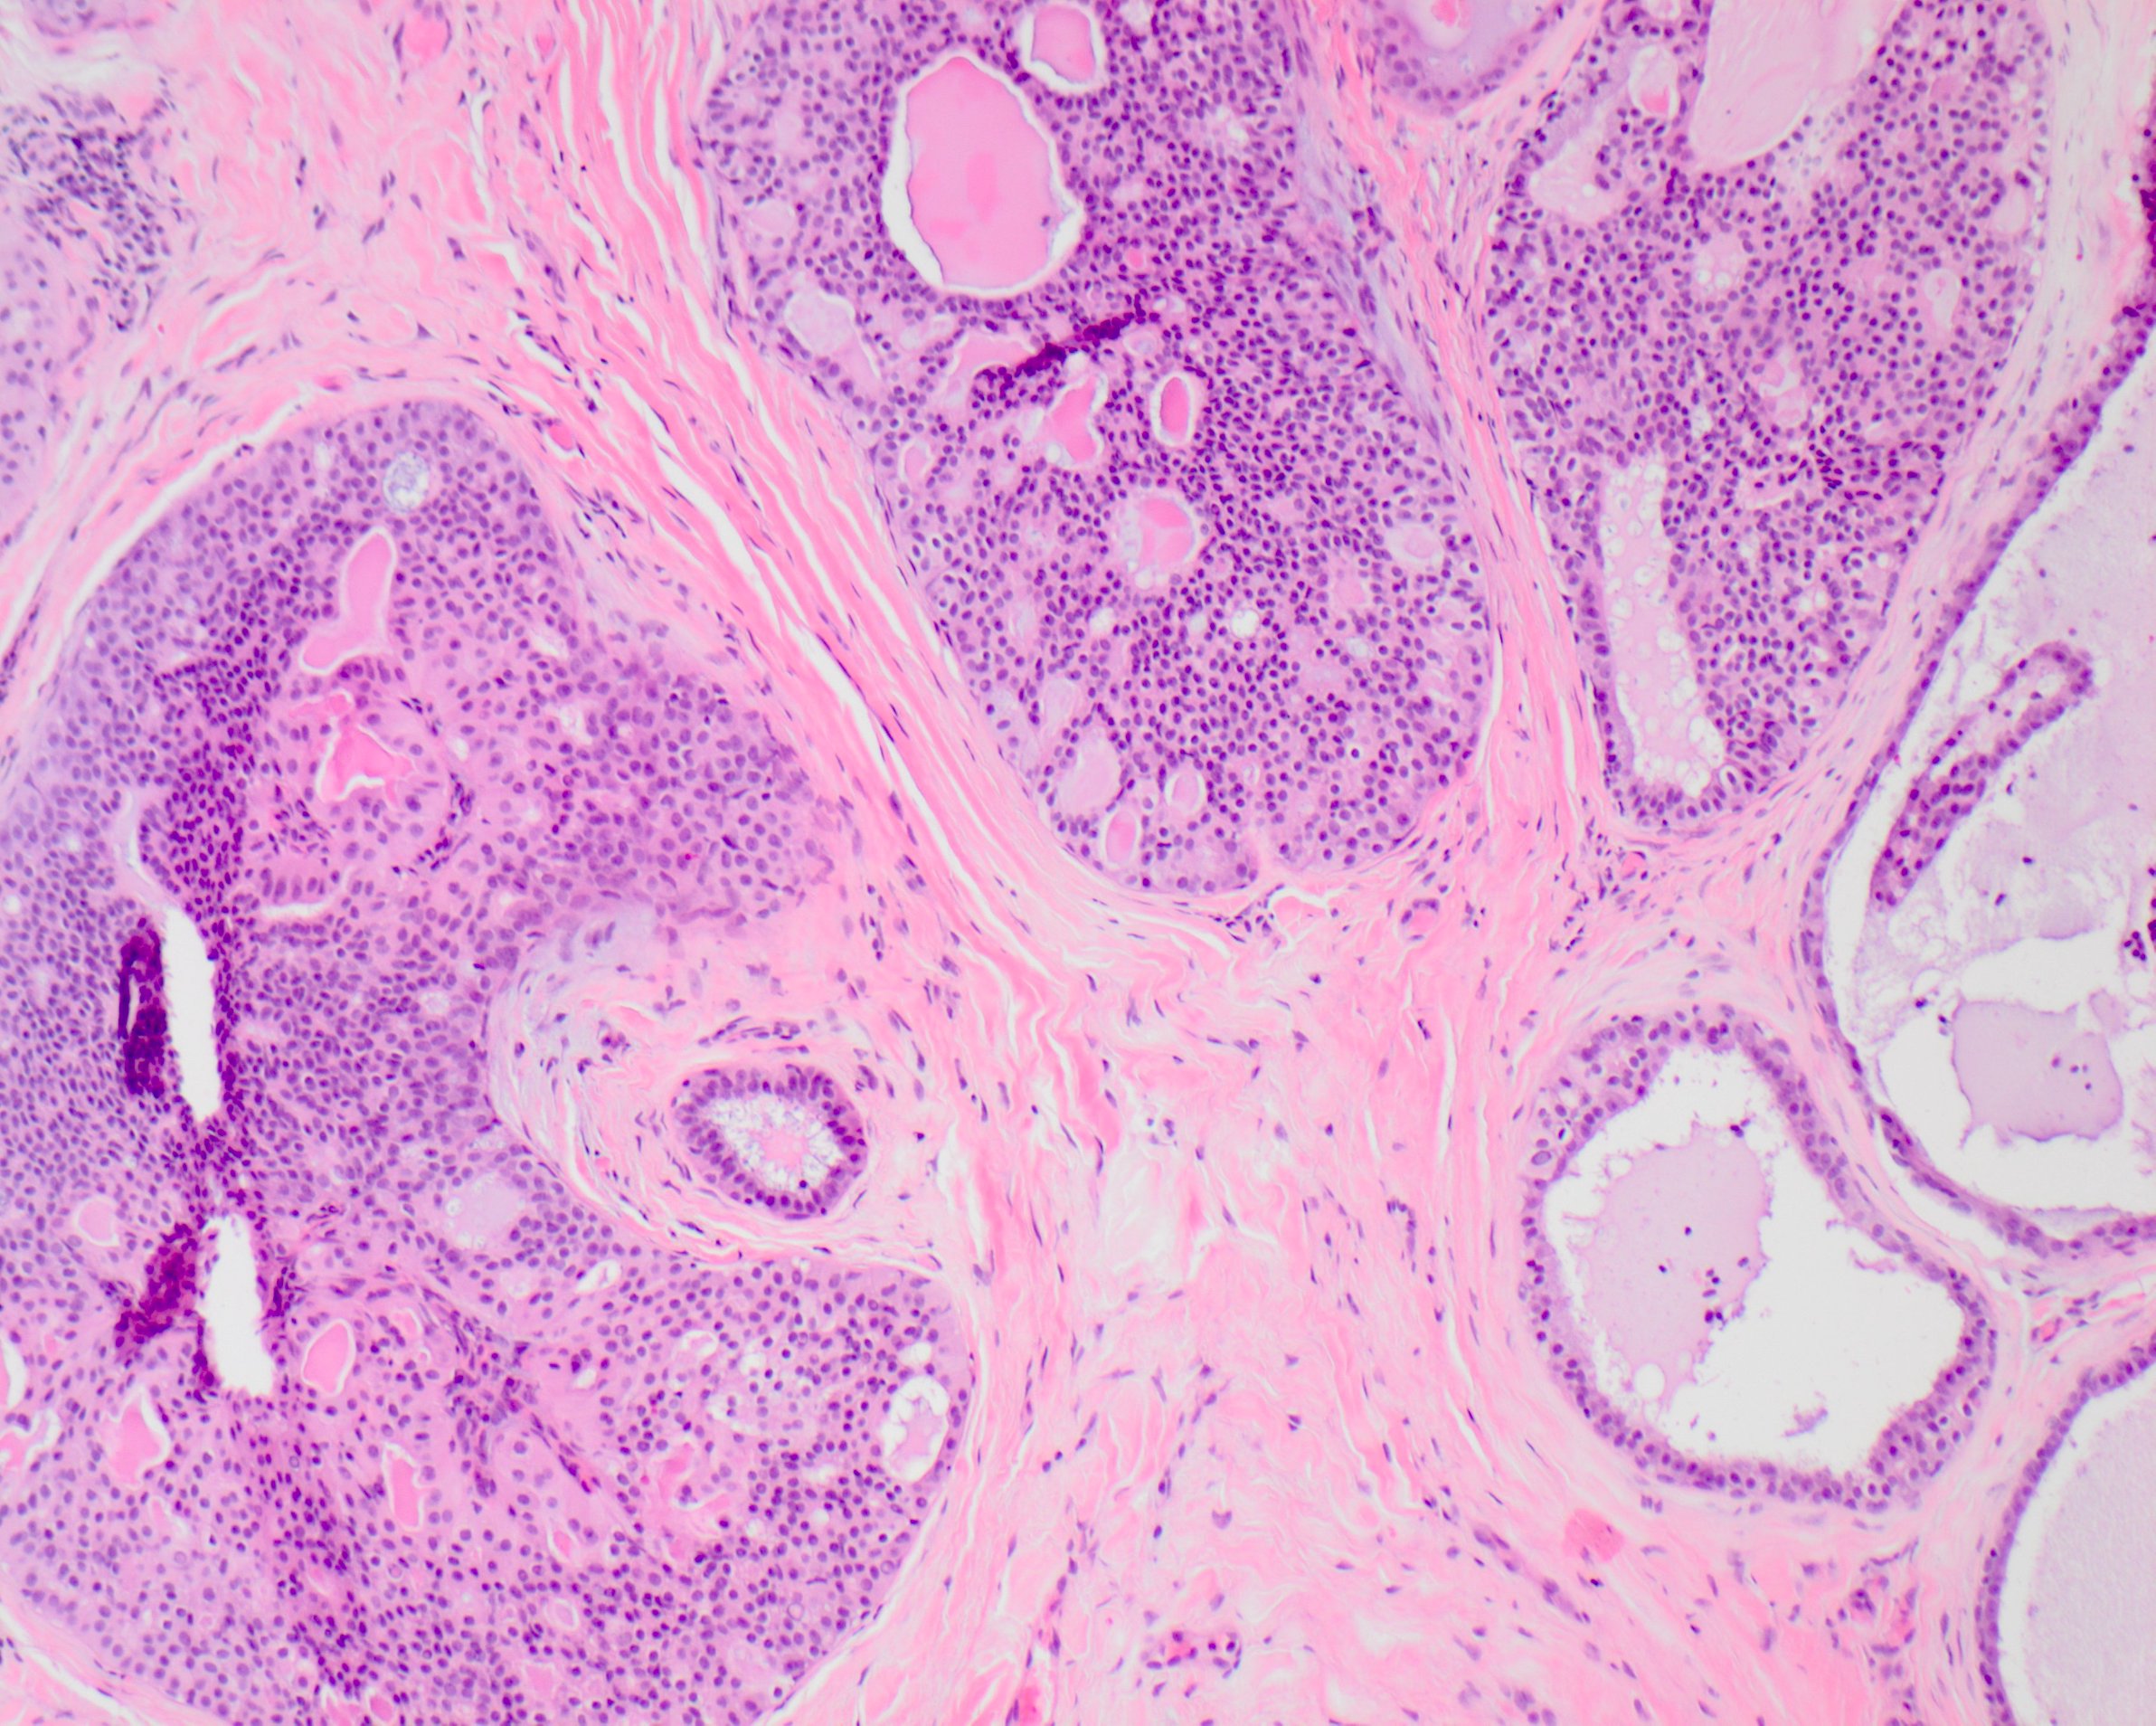 intraductal carcinoma prostate pathology outlines